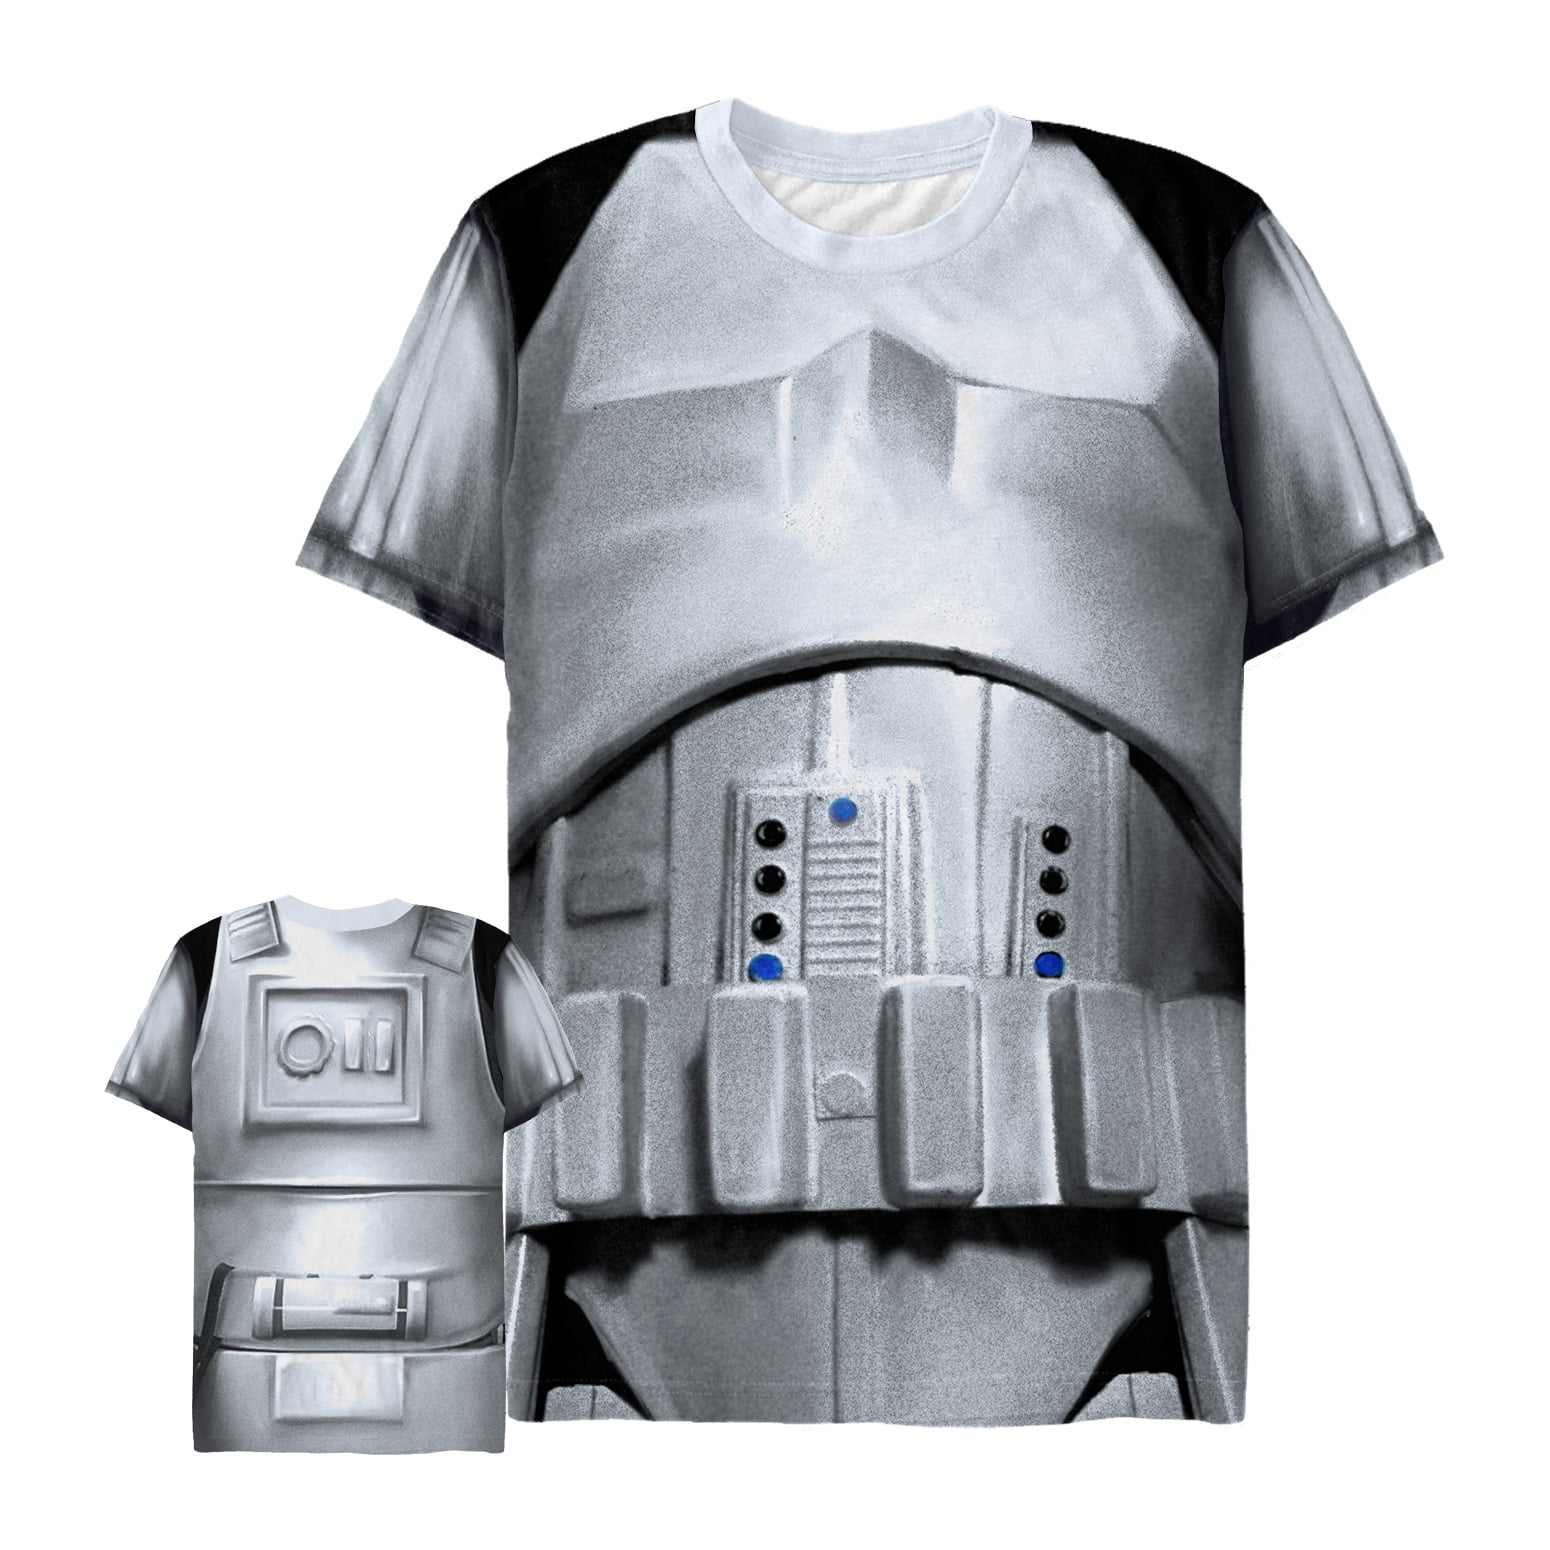 stormtrooper costume t shirt